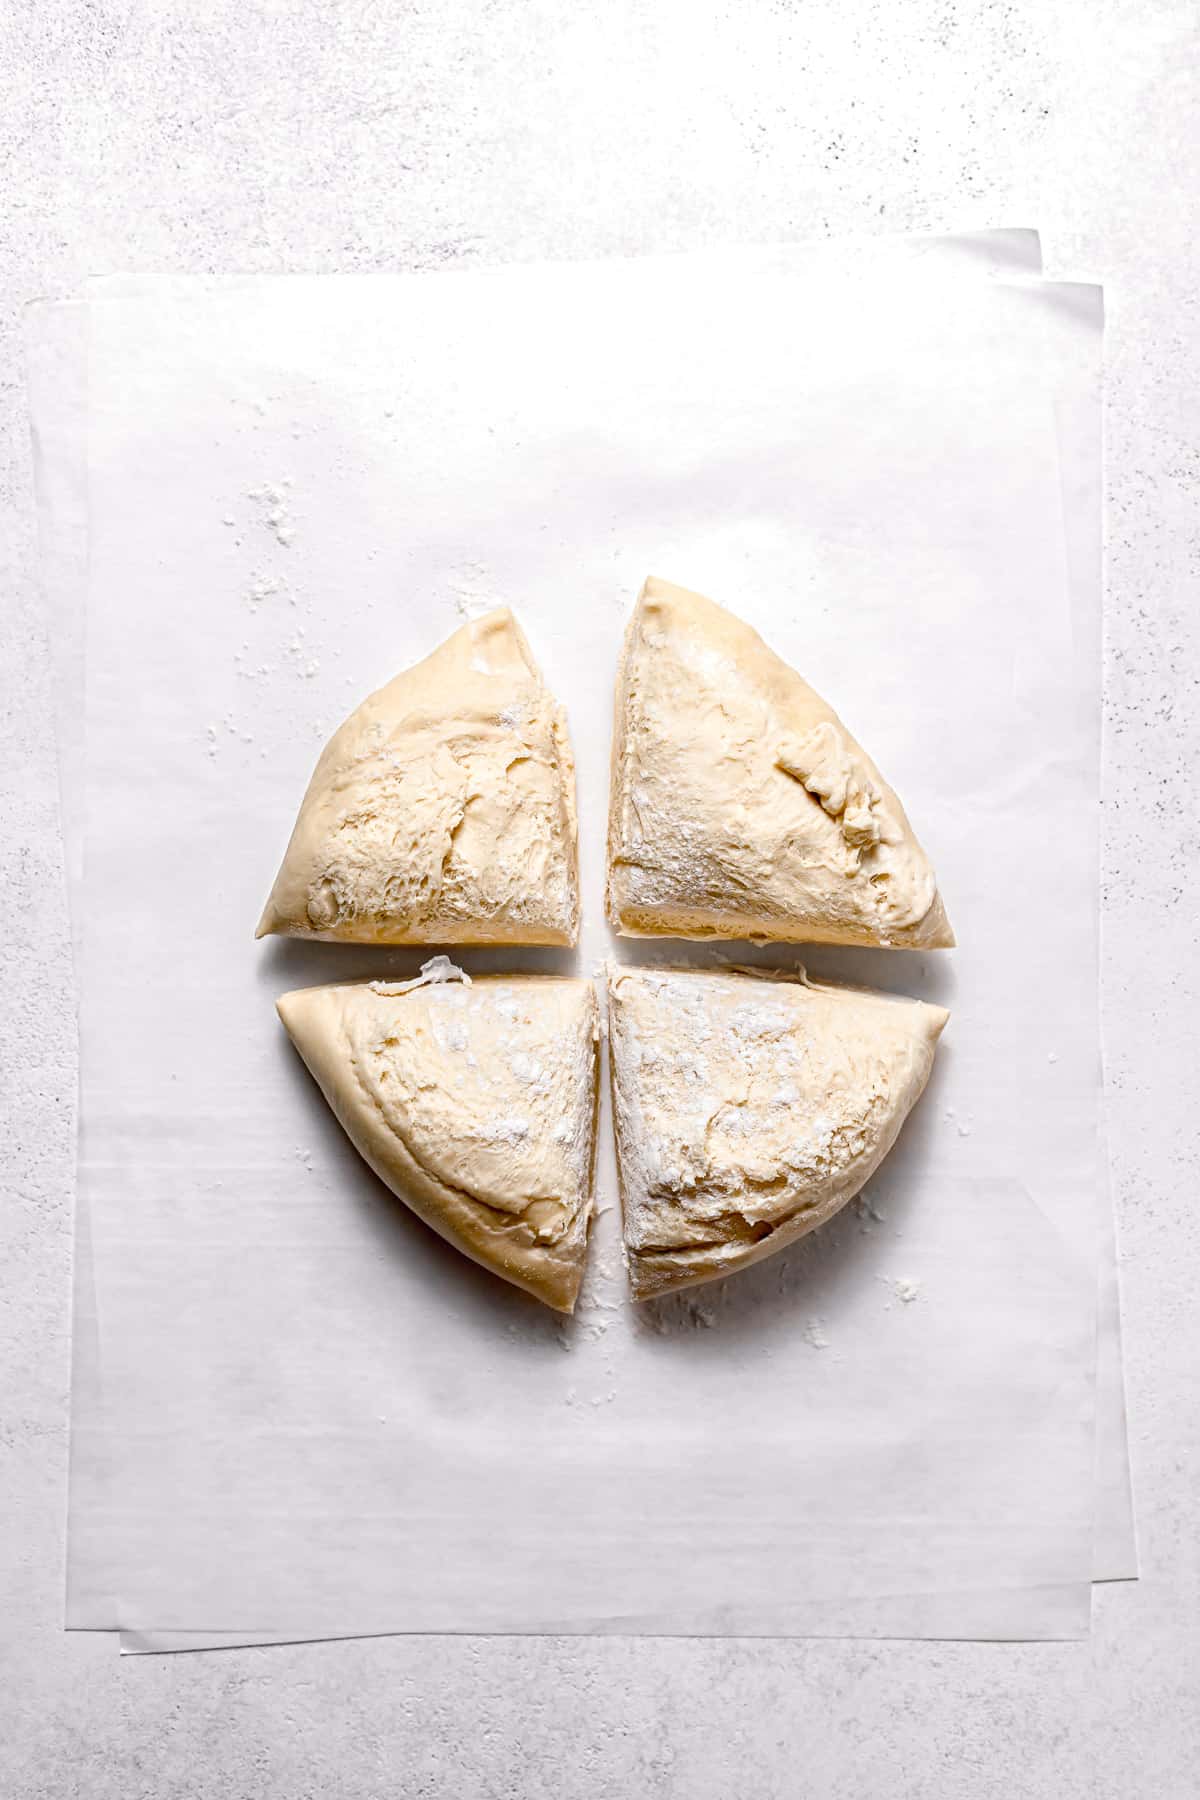 dough cut into four pieces